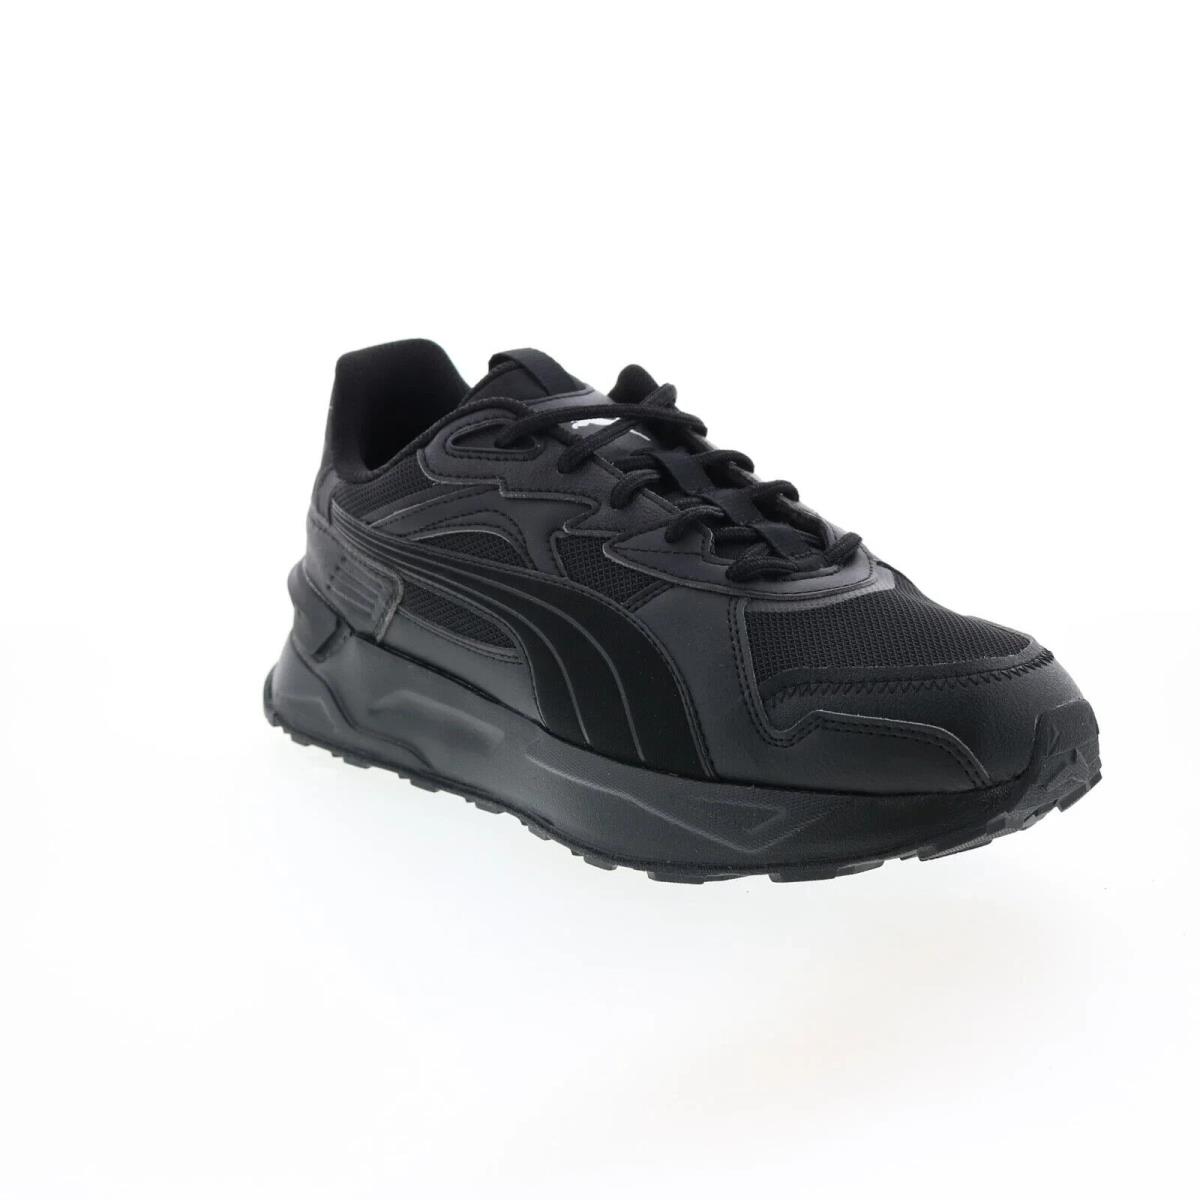 Puma N2124 Mens Black Mirage Sport Asphalt Lace Up Sneakers Size EU42.5 US 9.5 - Black